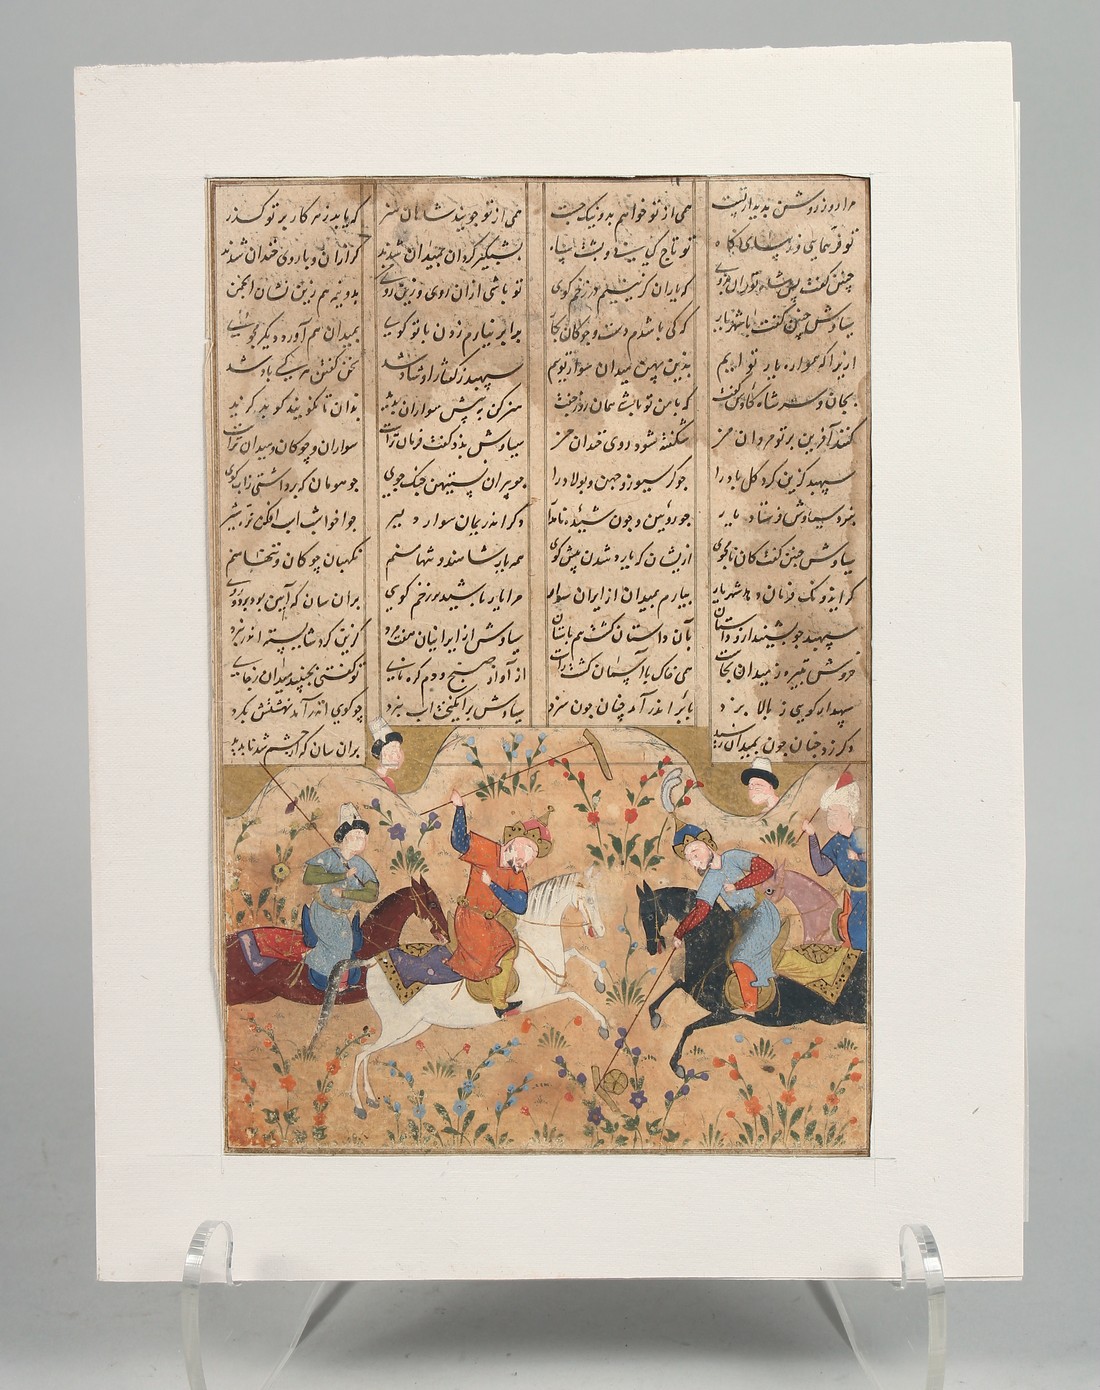 A 16TH CENTURY PERSIAN ILLUSTRATED LEAF FROM A MANUSCRIPT OF FIRDANSI'S SHAHNAMA, depicting Siyavash